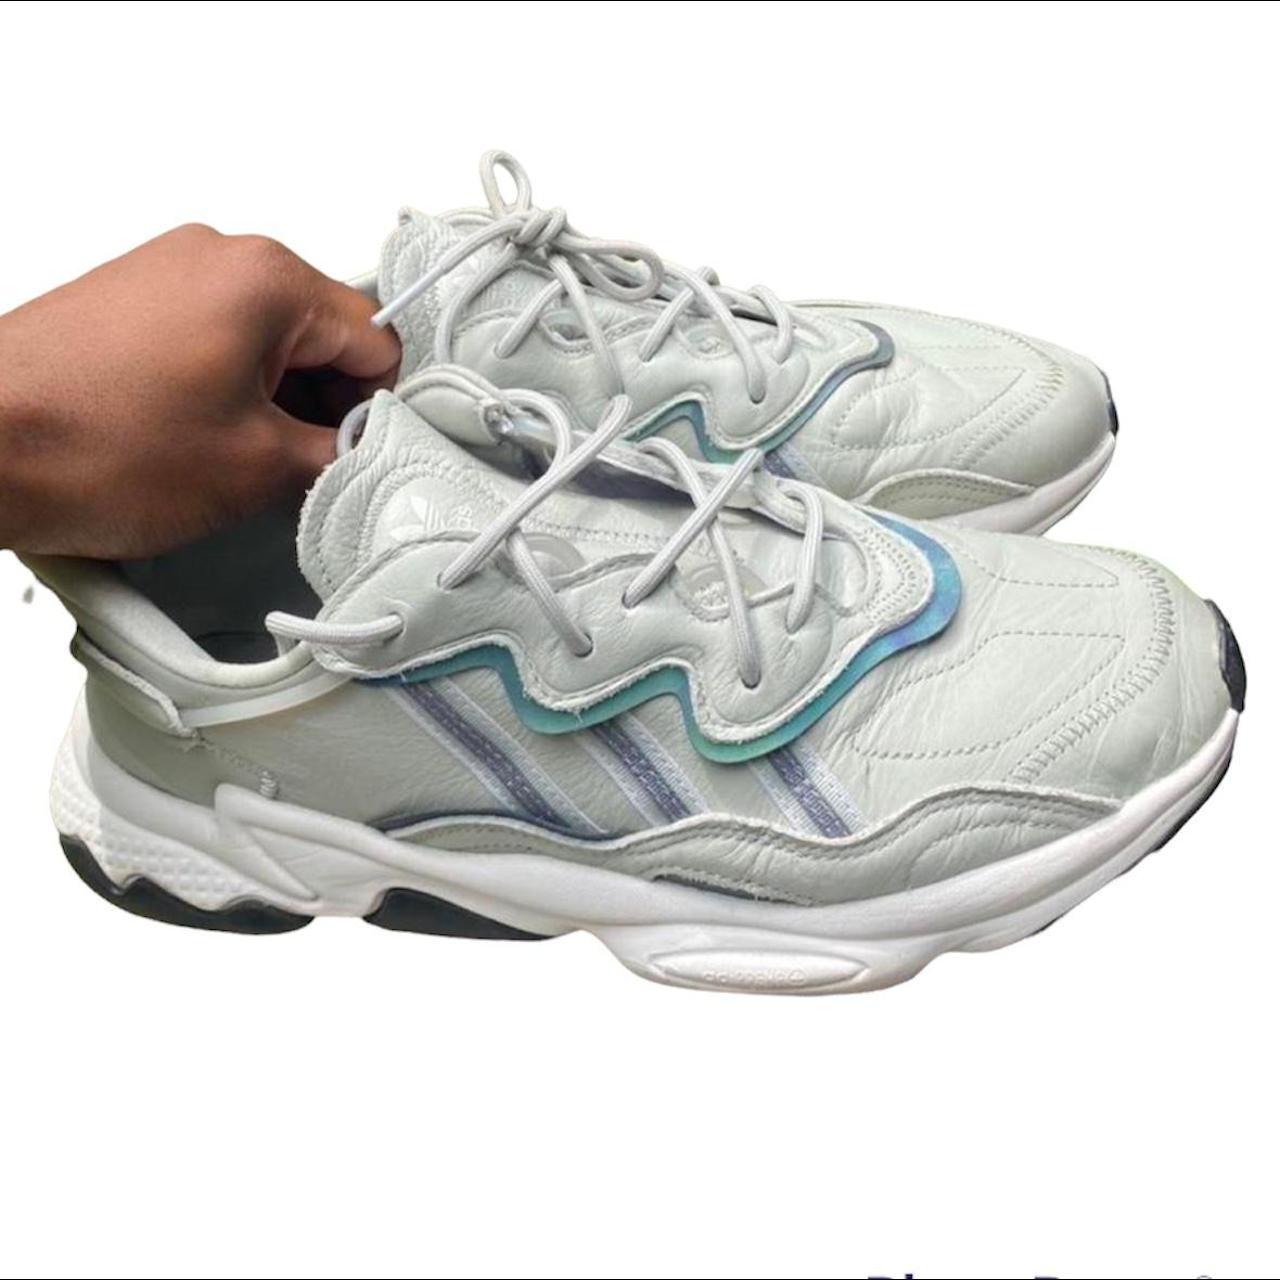 Product Image 1 - Grey Ozweego reflective shoes addidas